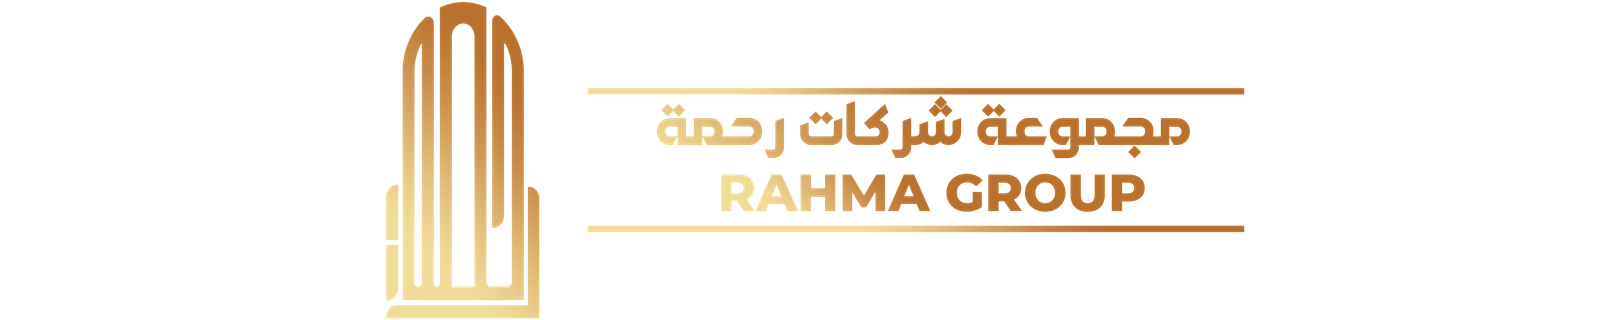 Rahma Group